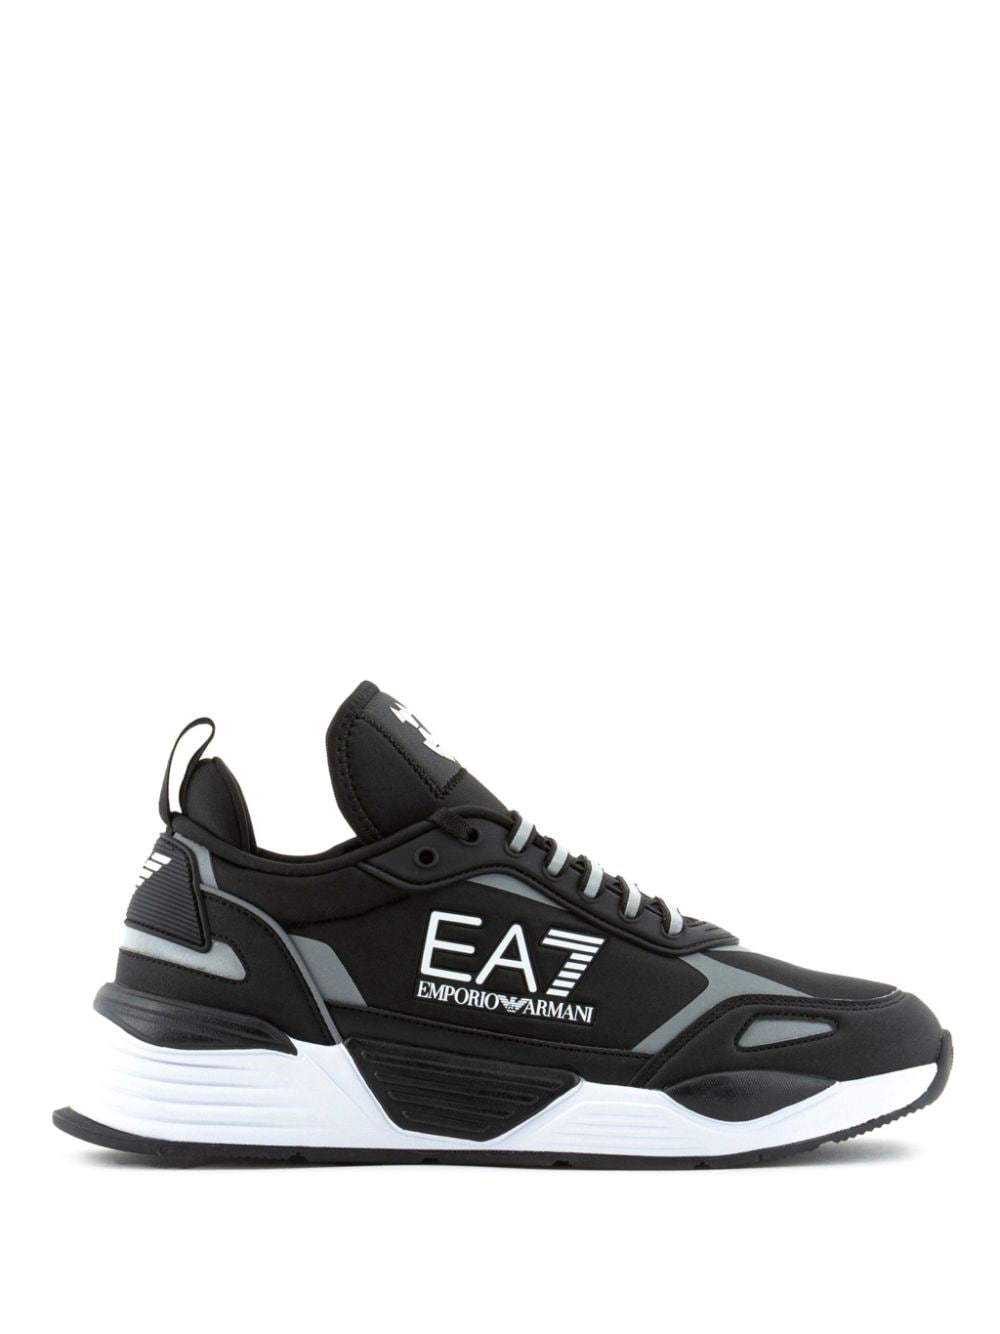 Ea7 Emporio Armani Ace Runner lace-up sneakers - Black von Ea7 Emporio Armani